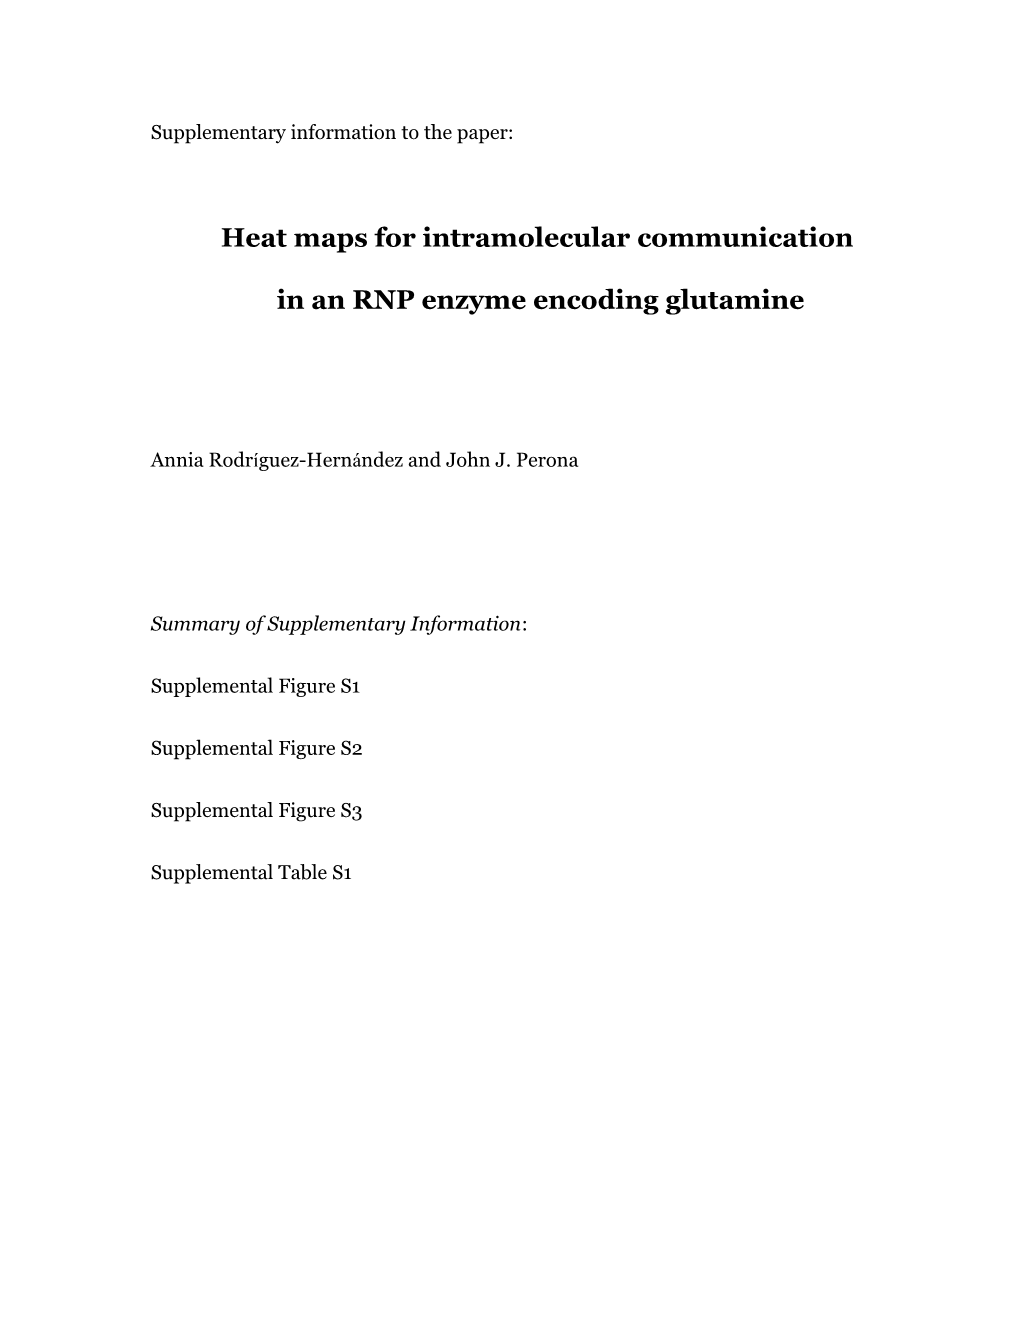 Heat Maps for Intramolecular Communication